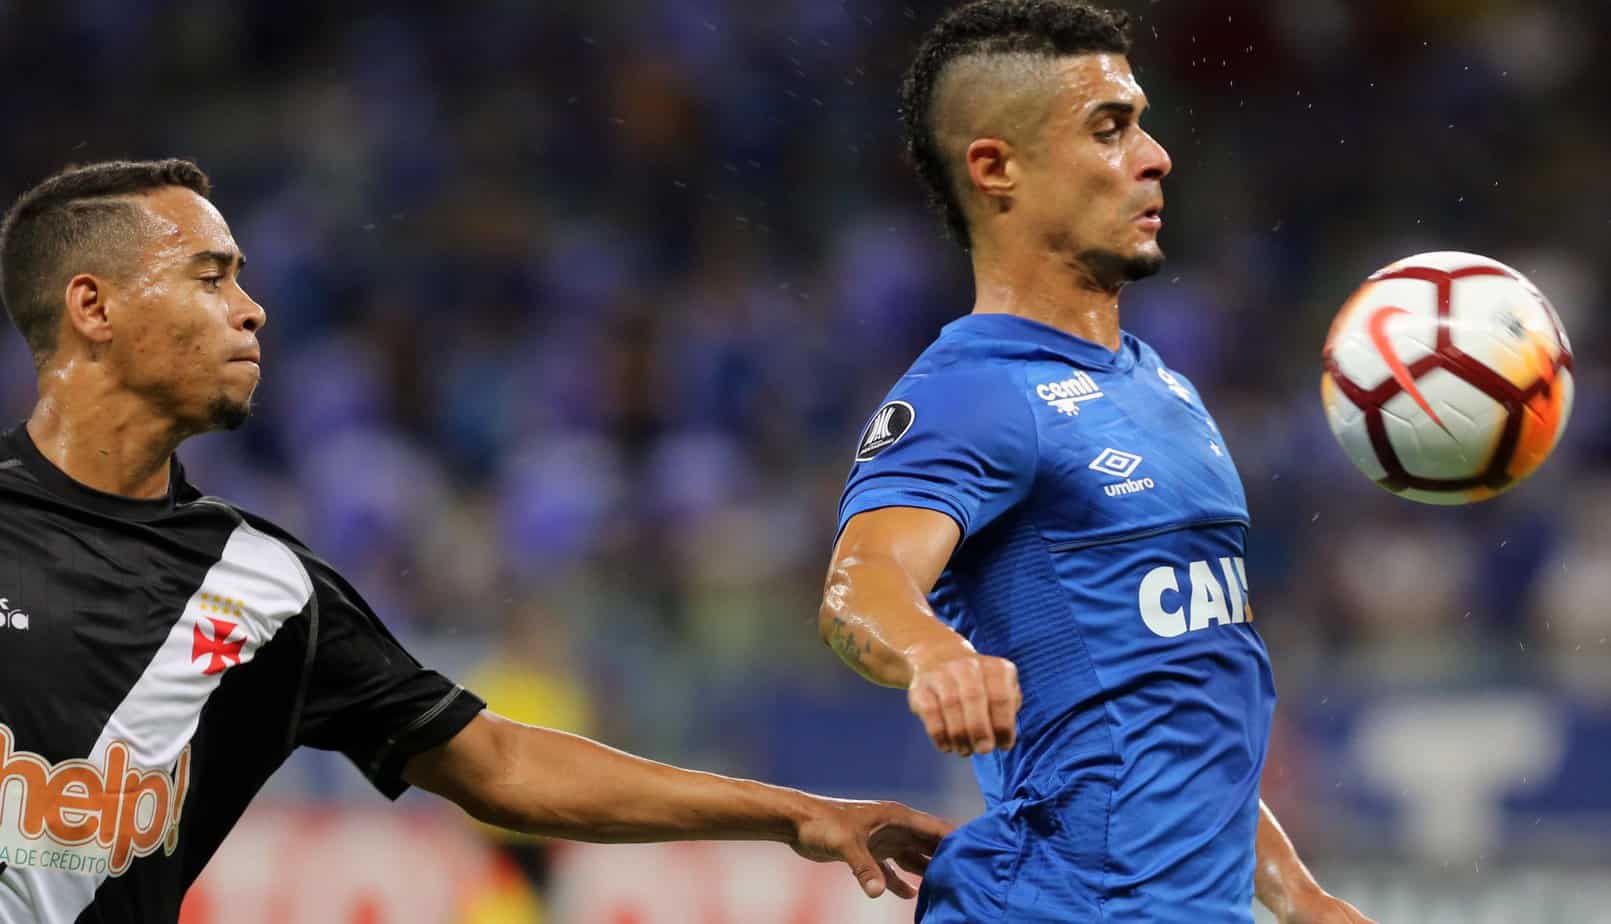 Vasco da Gama vs. Cruzeiro Preview and Betting Odds